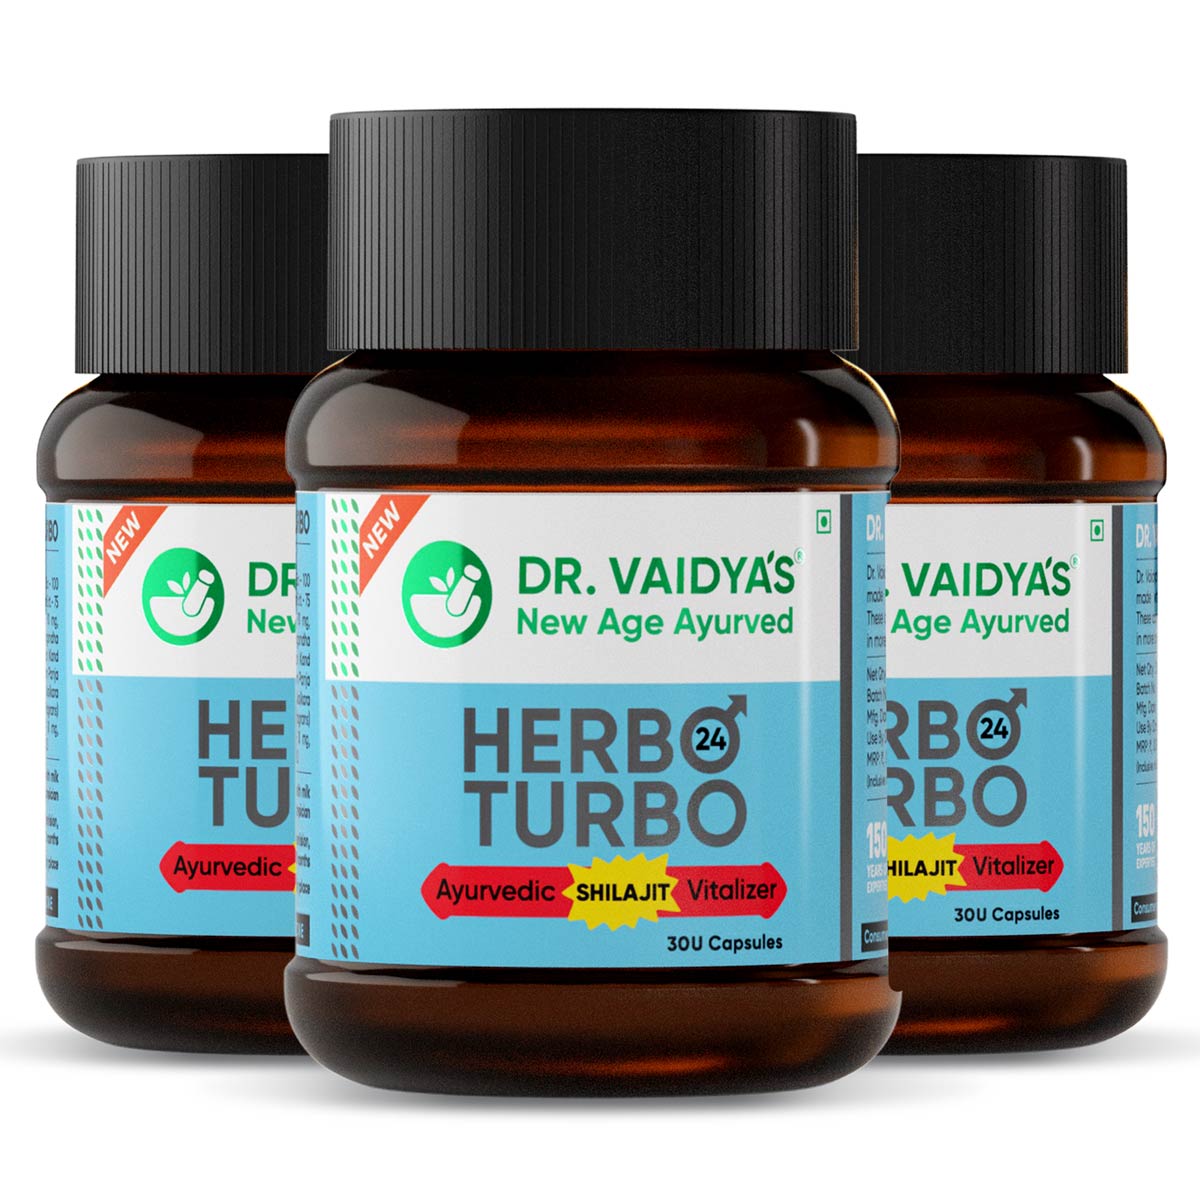 Dr. Vaidya's Herbo24Turbo - Pack of 3